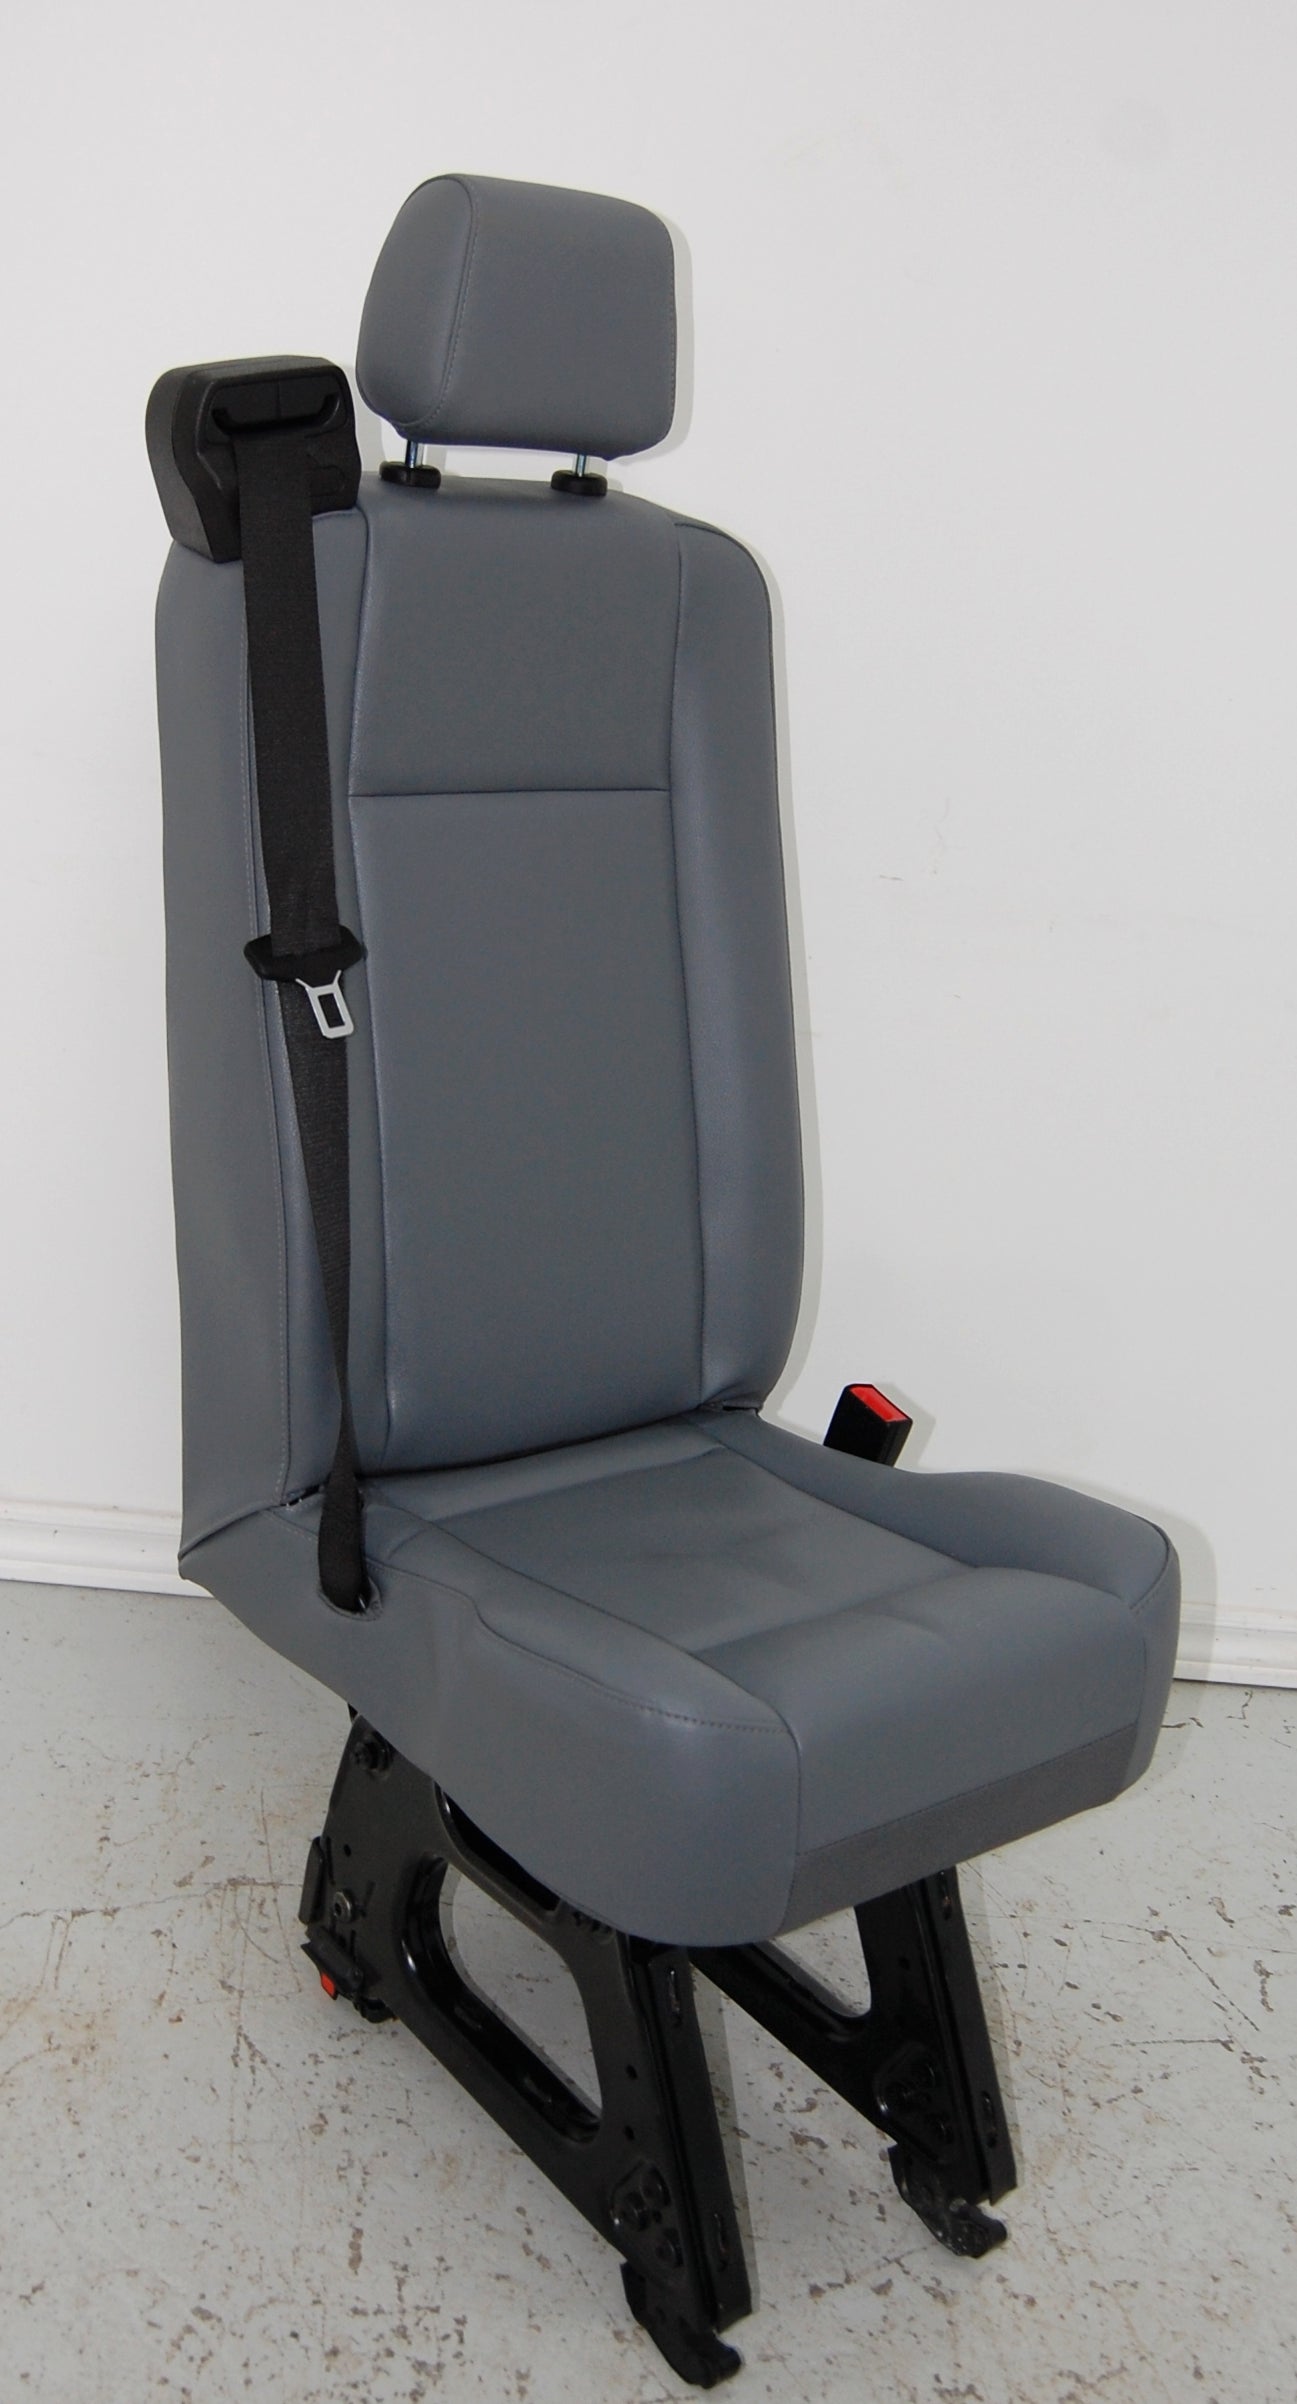 Ford Transit Passenger Van 2018 Grey Vinyl Removeable Single Jump Seat with Seatbelt Sprinter Van Chevy E150 VANLIFE Cargo Camper Savanna Express